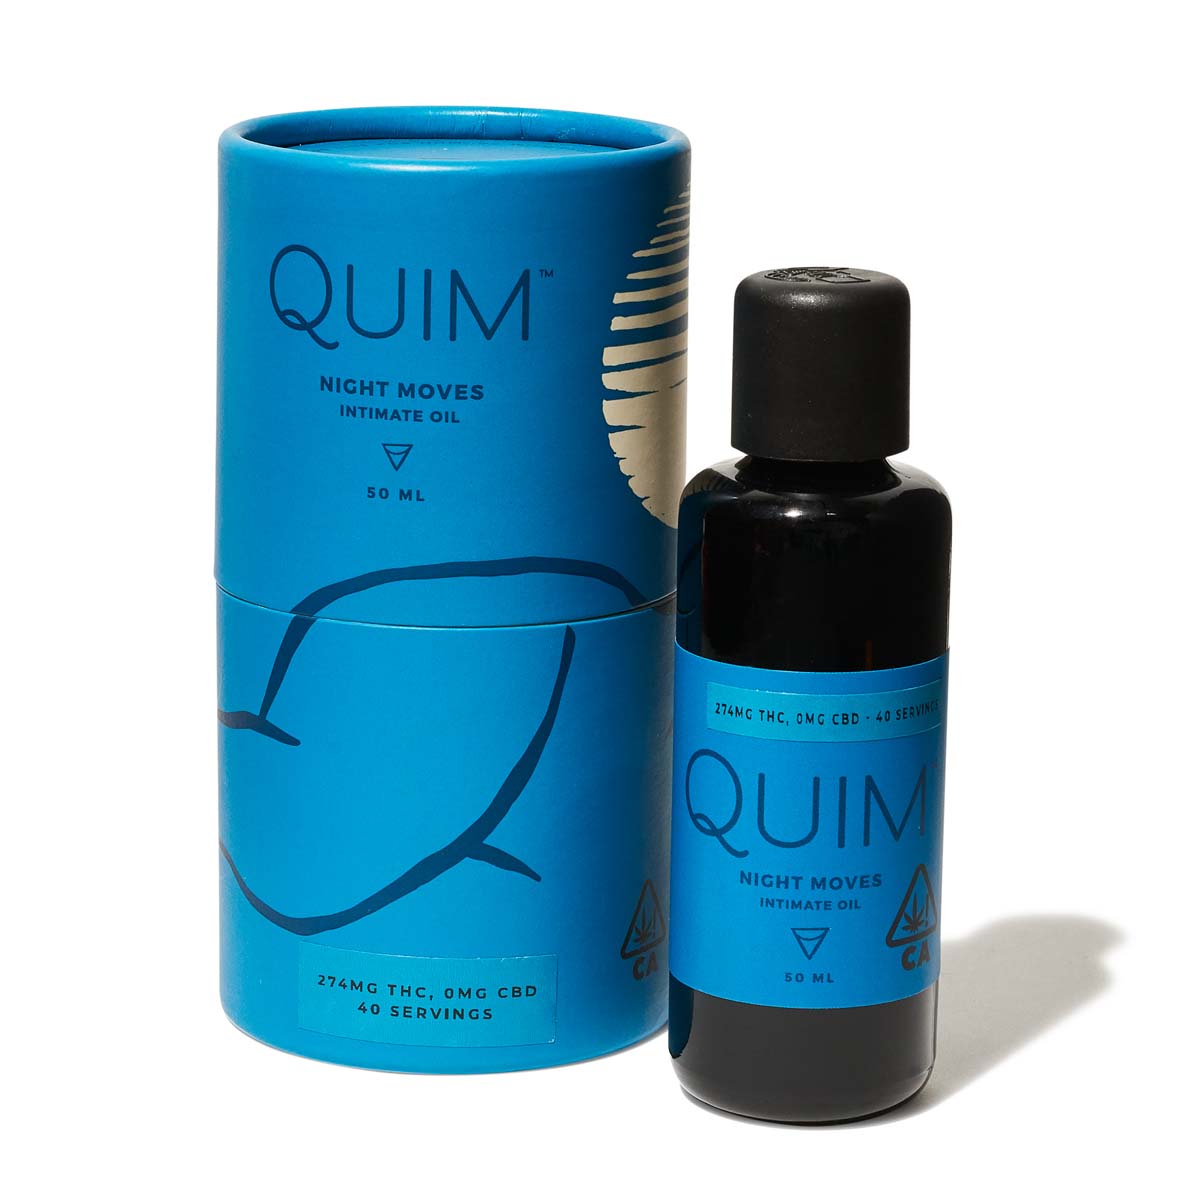 Quim Rock - Night Moves Intimate Oil.